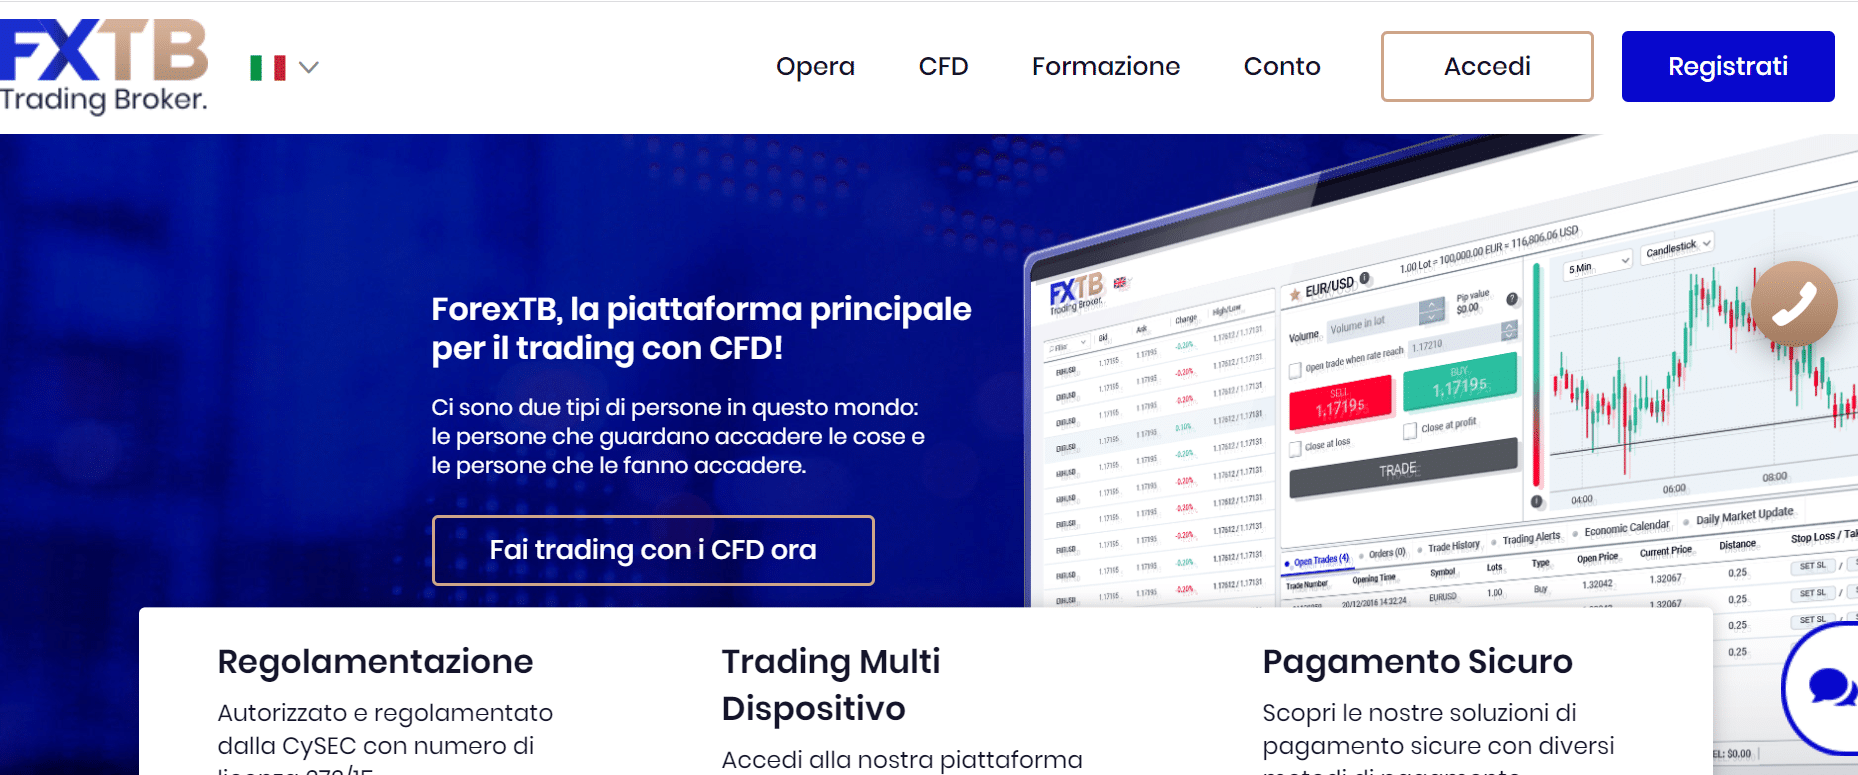 Trading online manuale con ForexTB o Copy Trading con eToro?